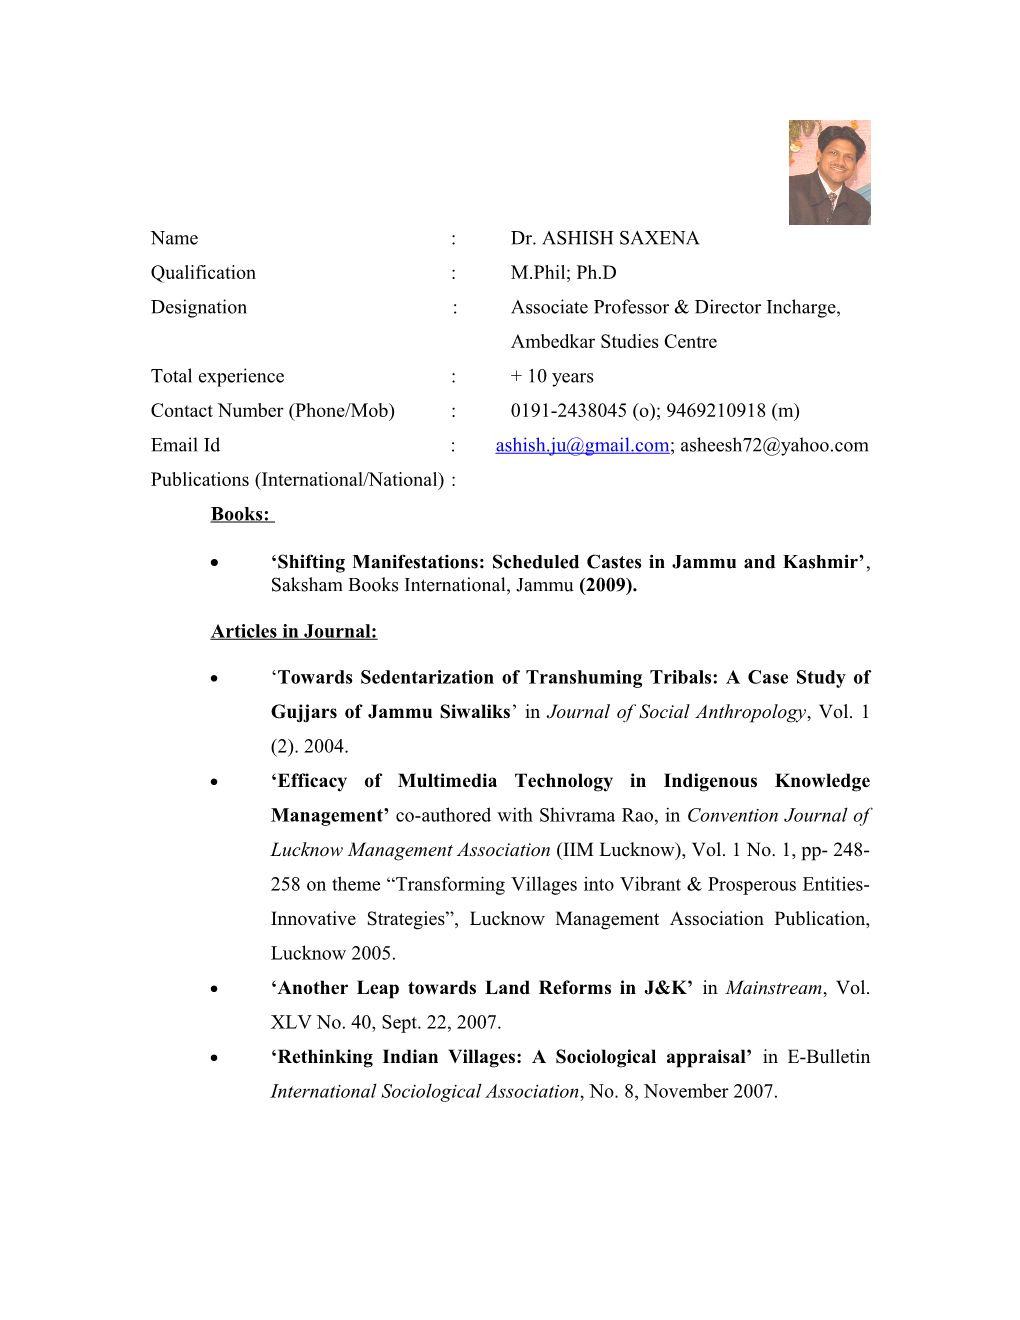 Designation :Associate Professor & Director Incharge, Ambedkar Studies Centre